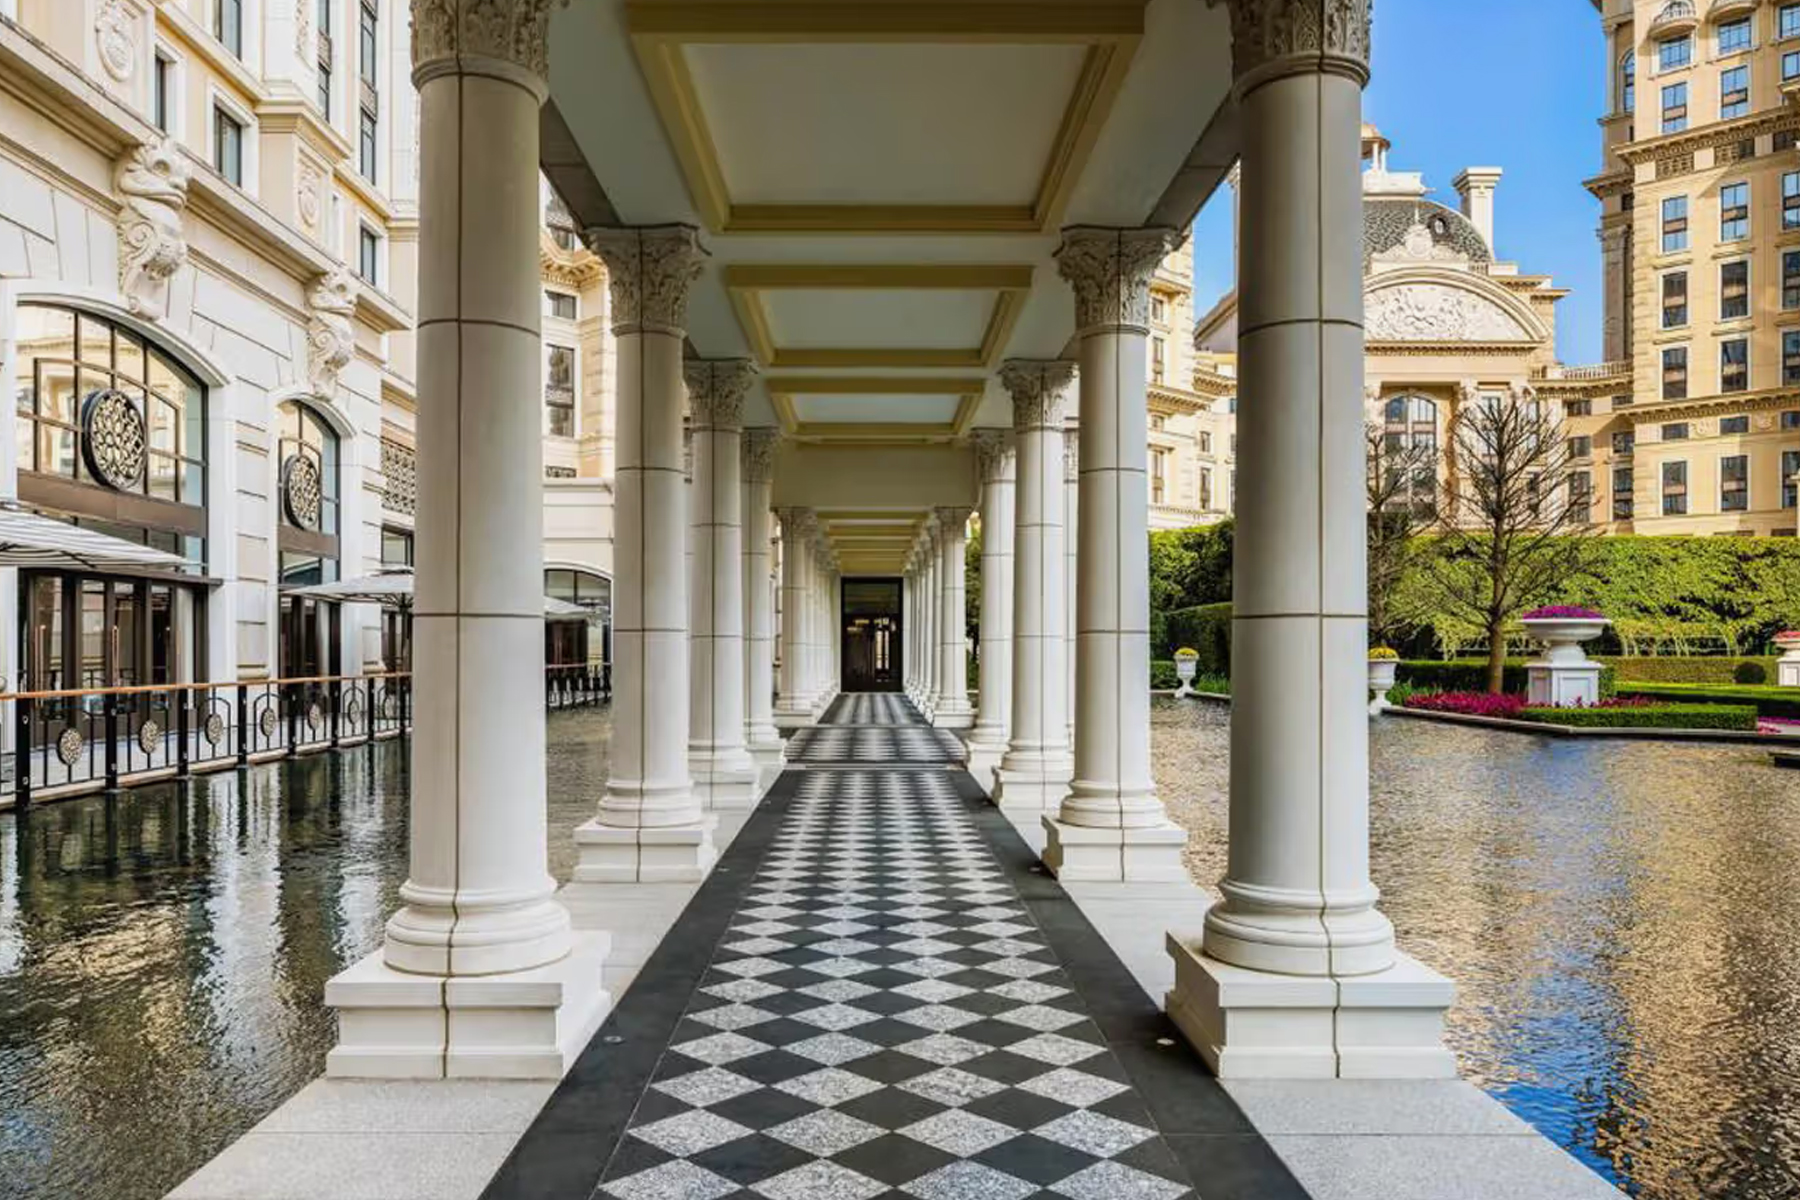 Palazzo Versace Macau primo hotel lusso asia